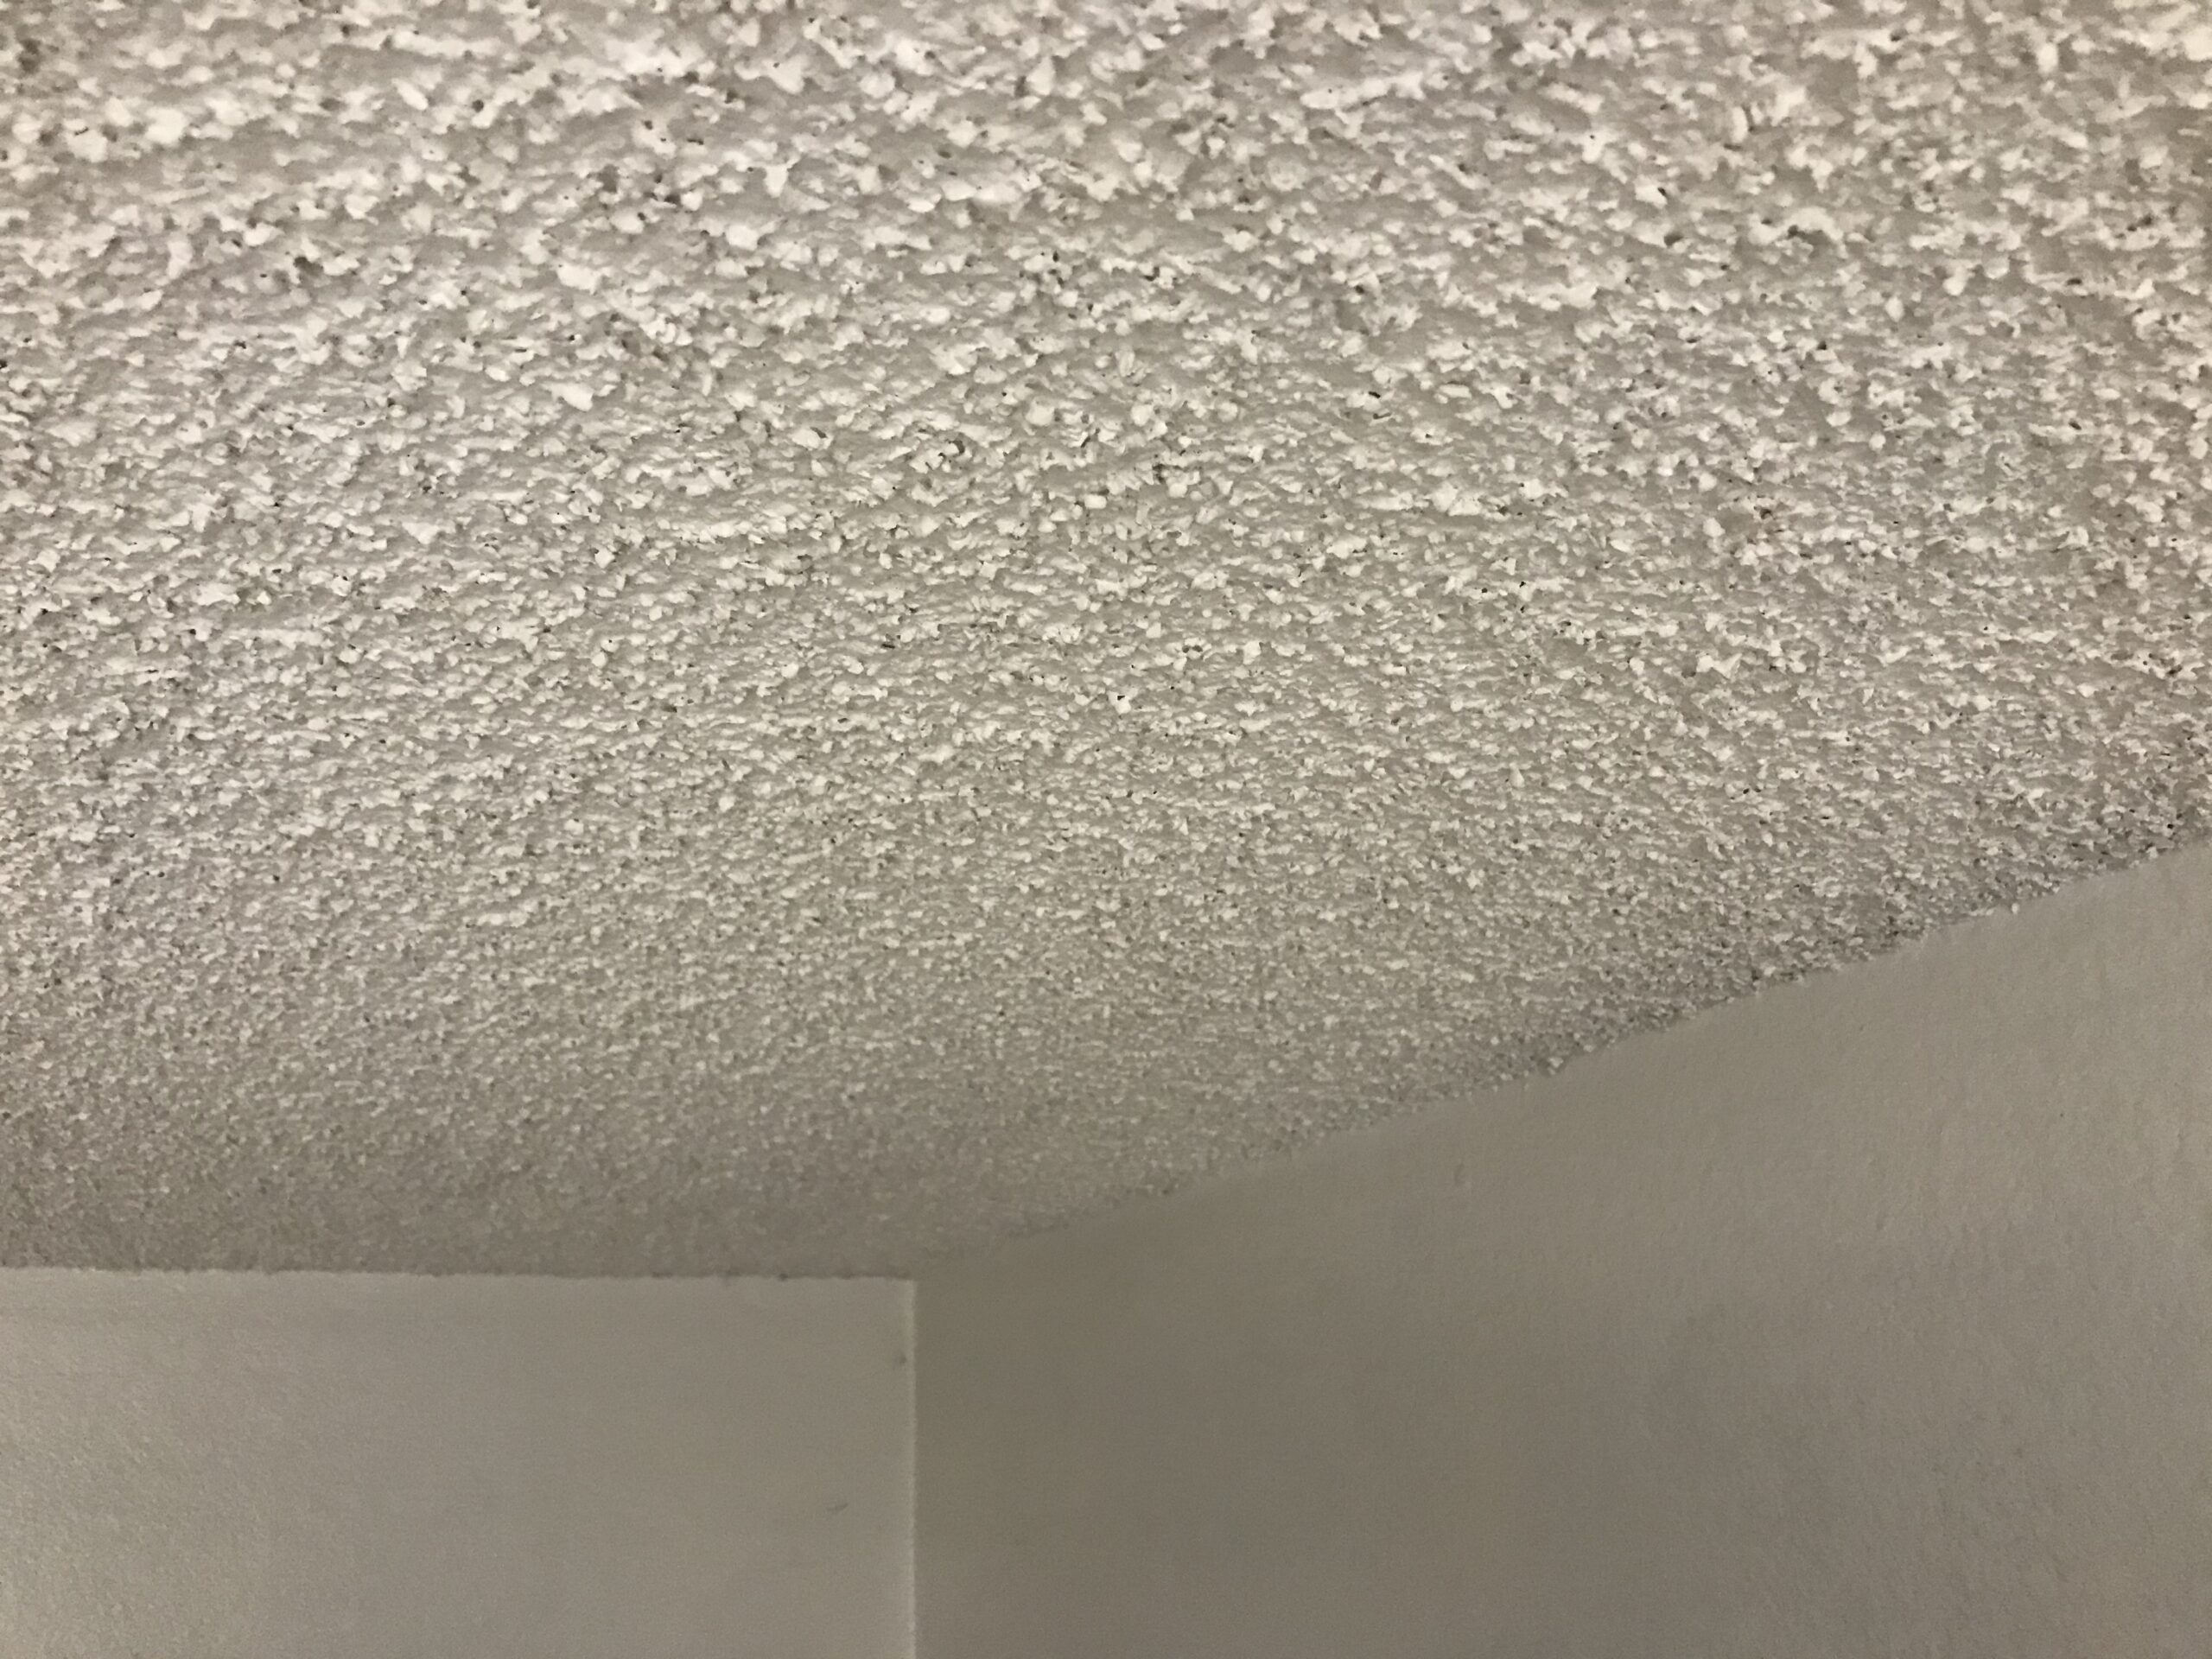 Popcorn ceiling asbesto